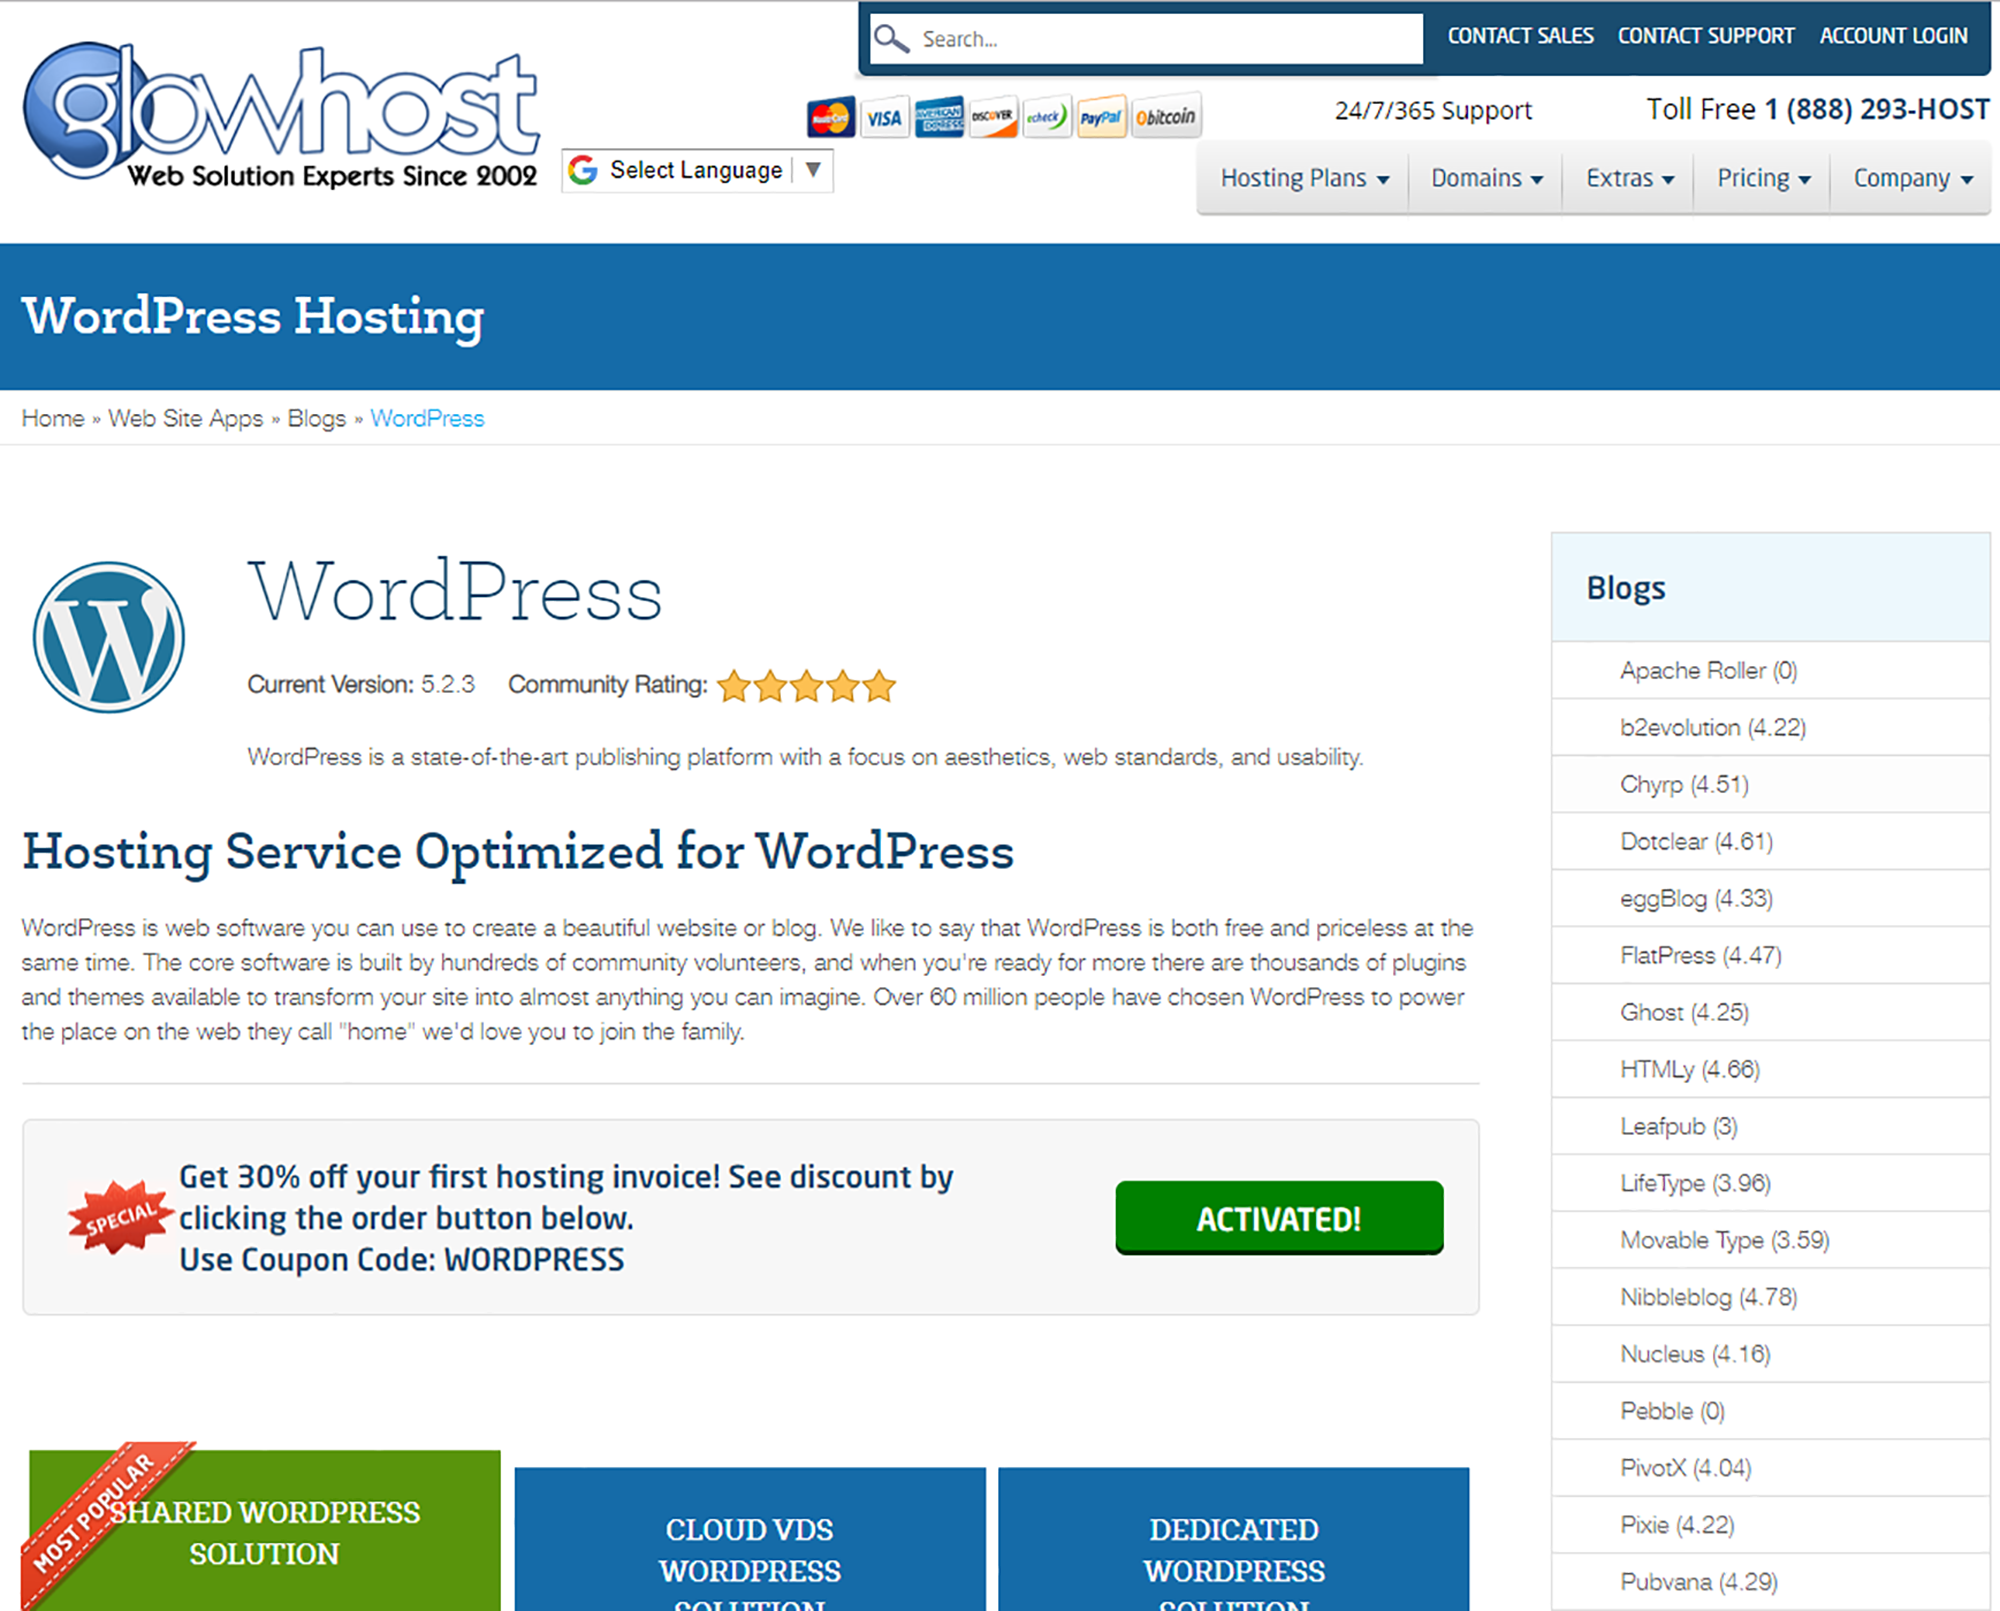 Glowhost WordPress Hosting